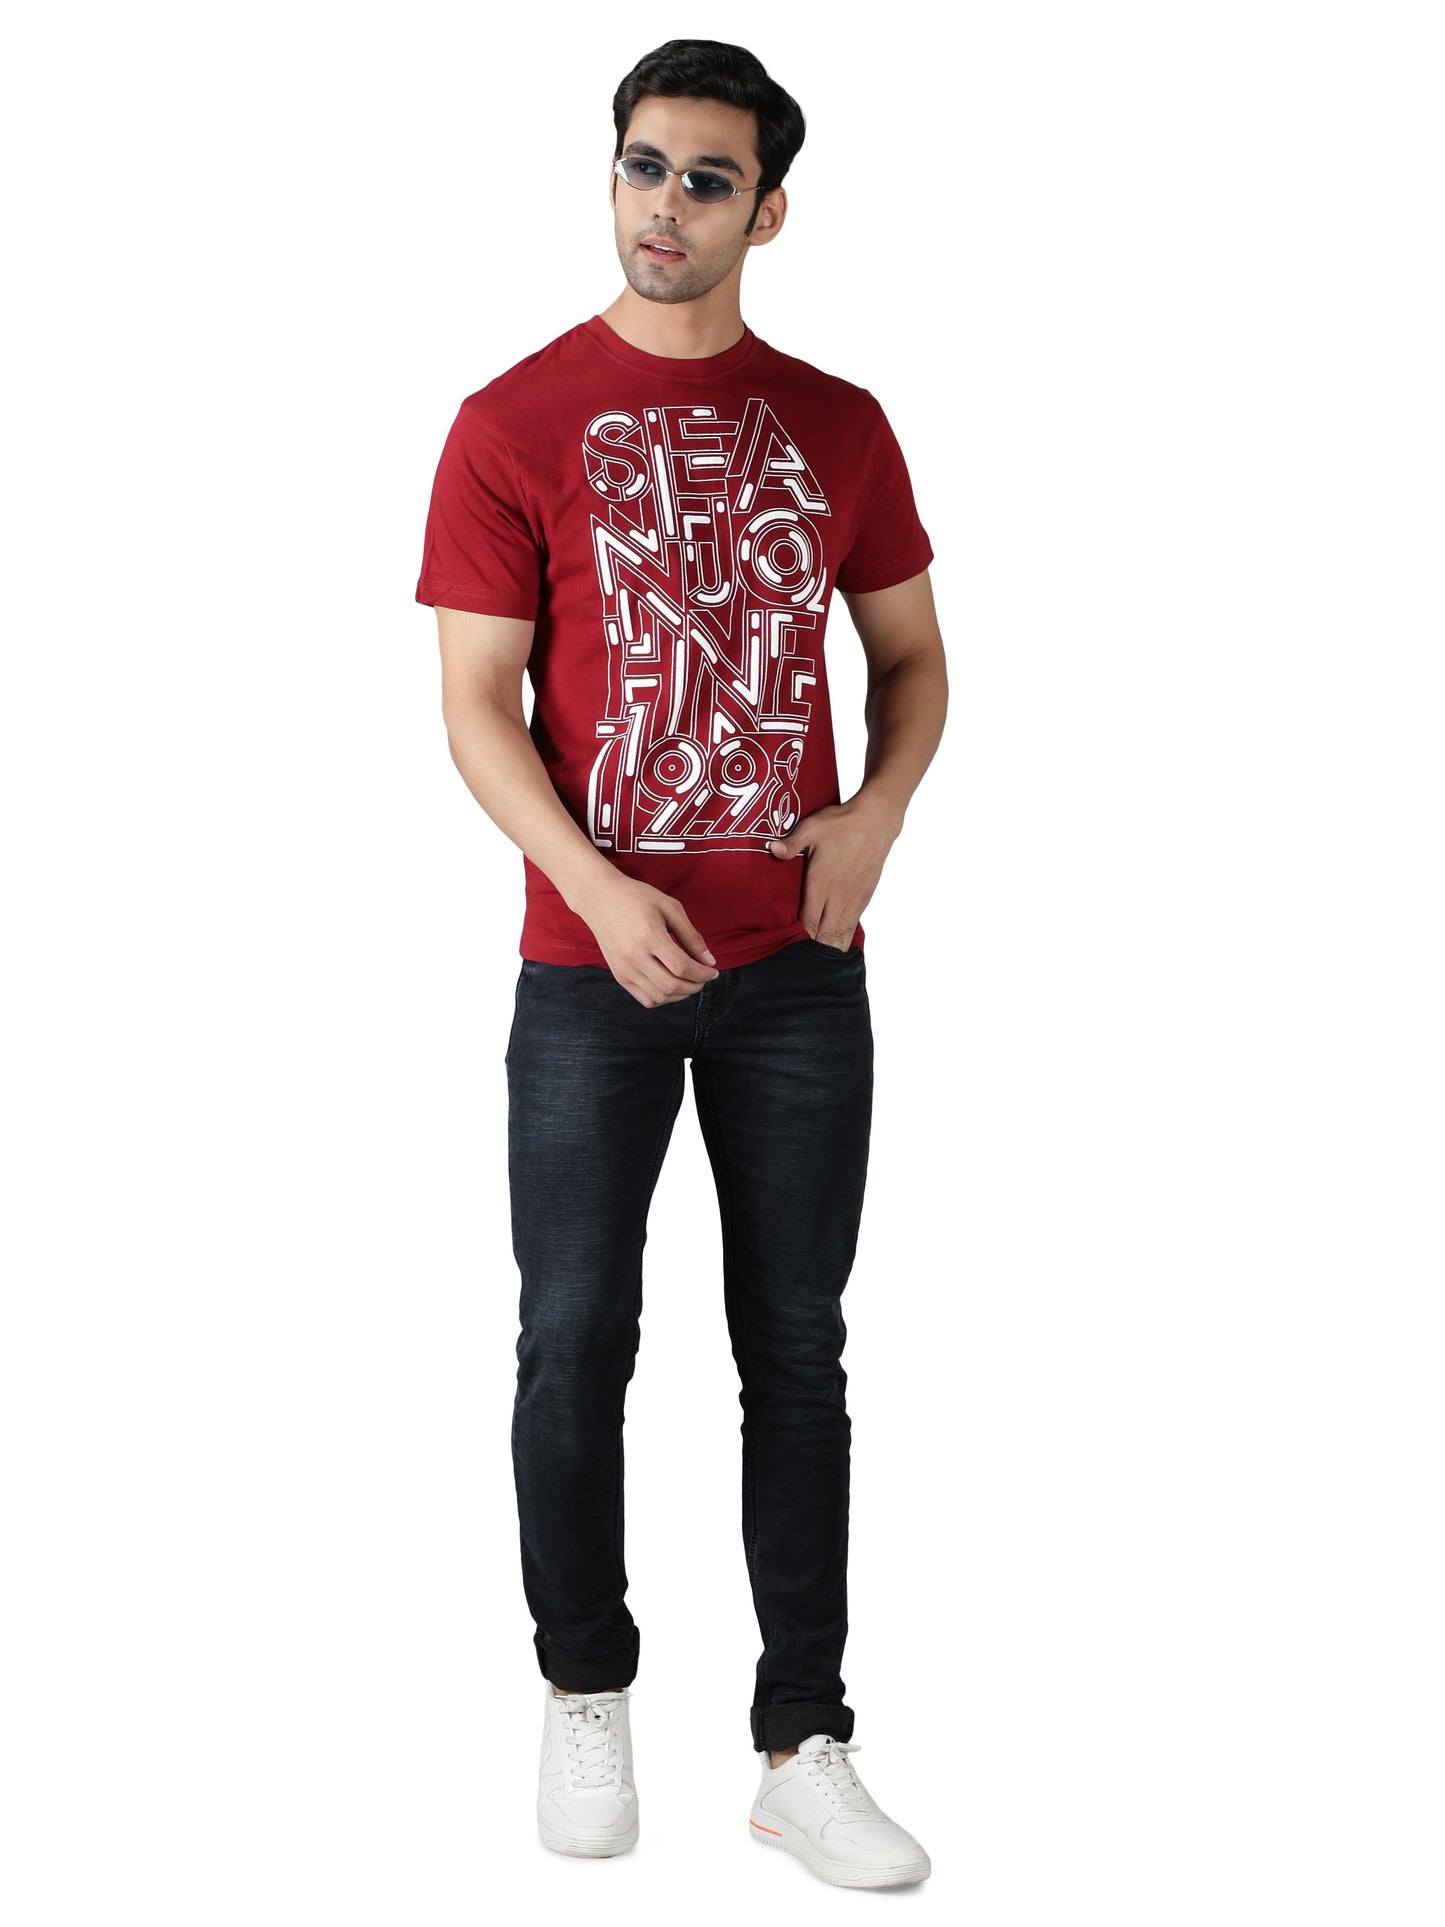 NUEVOSPORTA Men's Cotton Graphic Printed Maroon T-Shirt